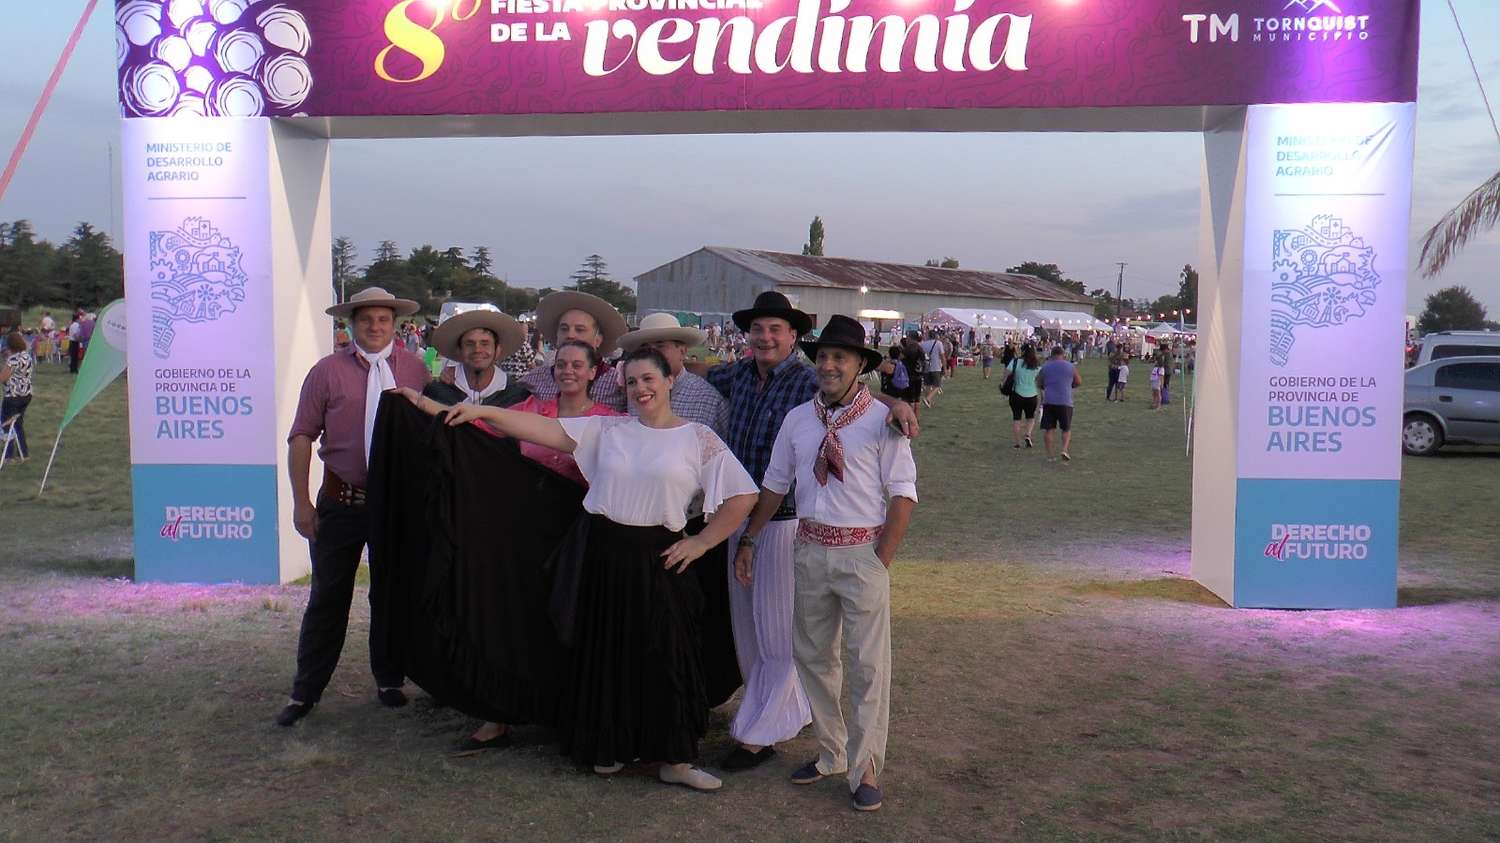 Semana Santa en Sierra de la Ventana: Fiesta de la Vendimia con shows folclóricos